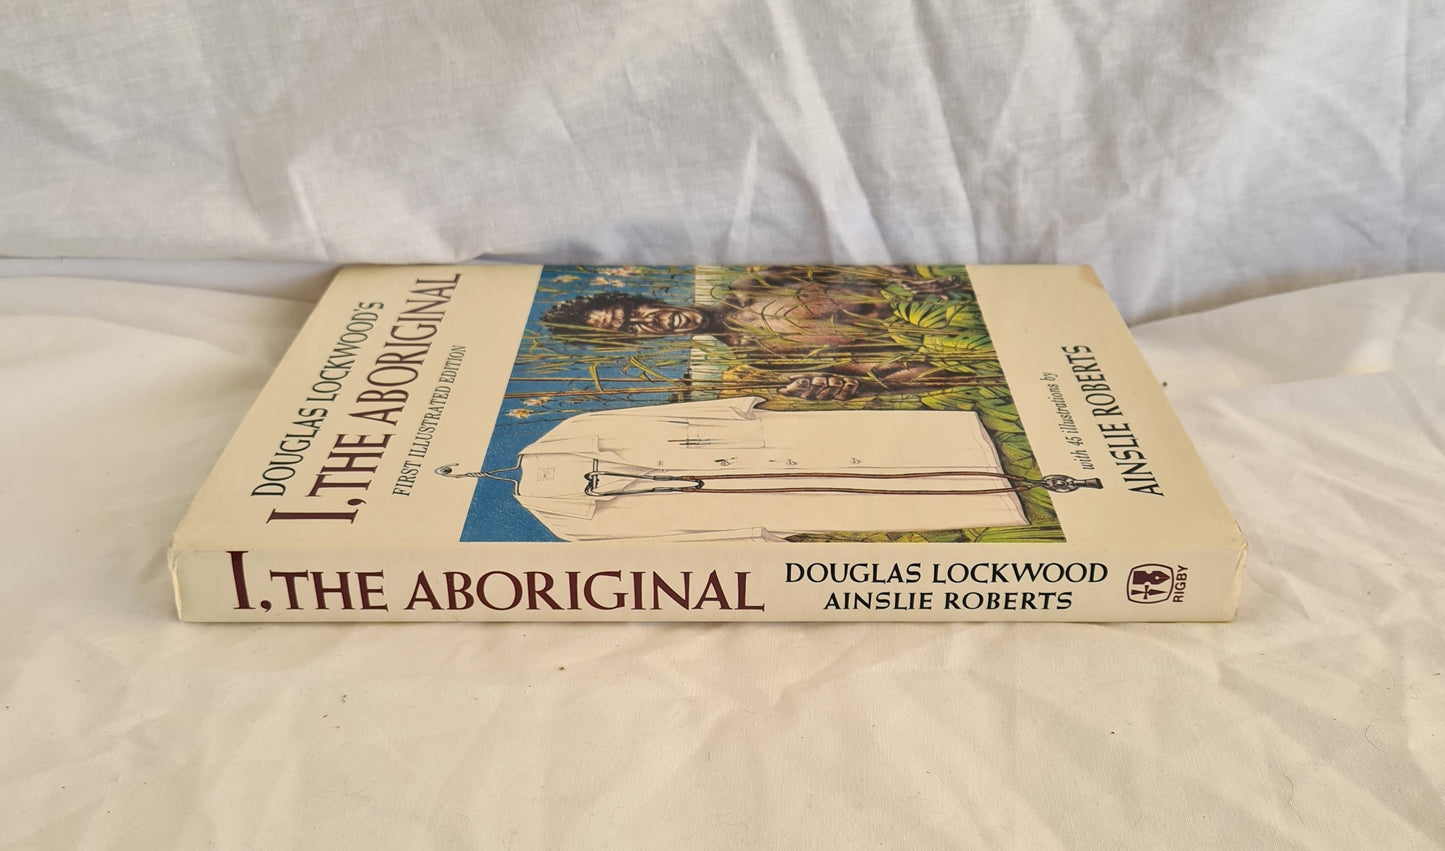 I, The Aboriginal by Douglas Lockwood